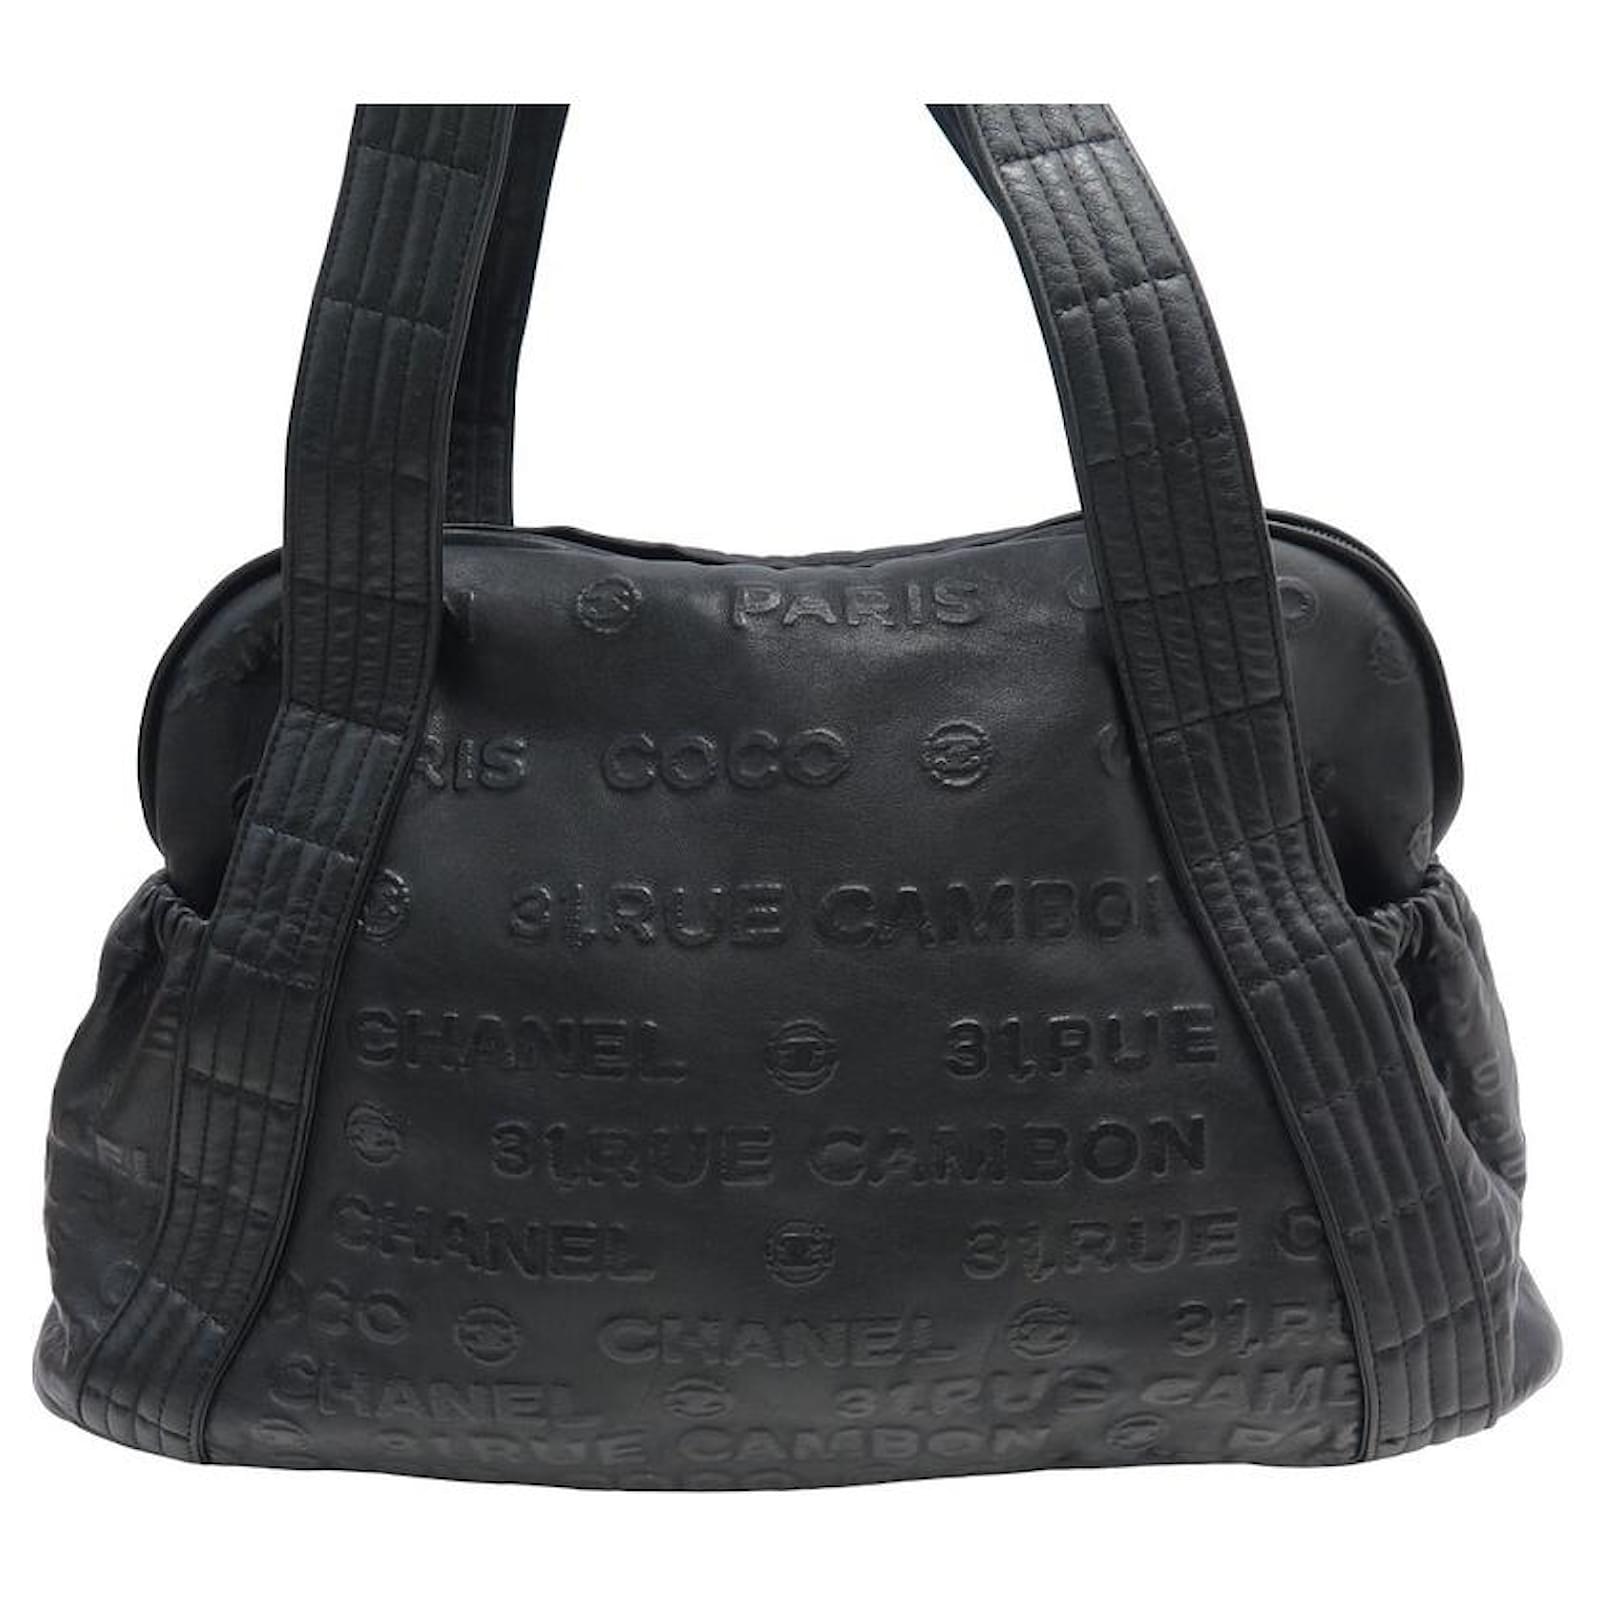 Bonhams : Chanel a Black Leather Mini Cambon Ligne Bowling Bag 2005-06  (includes serial sticker)